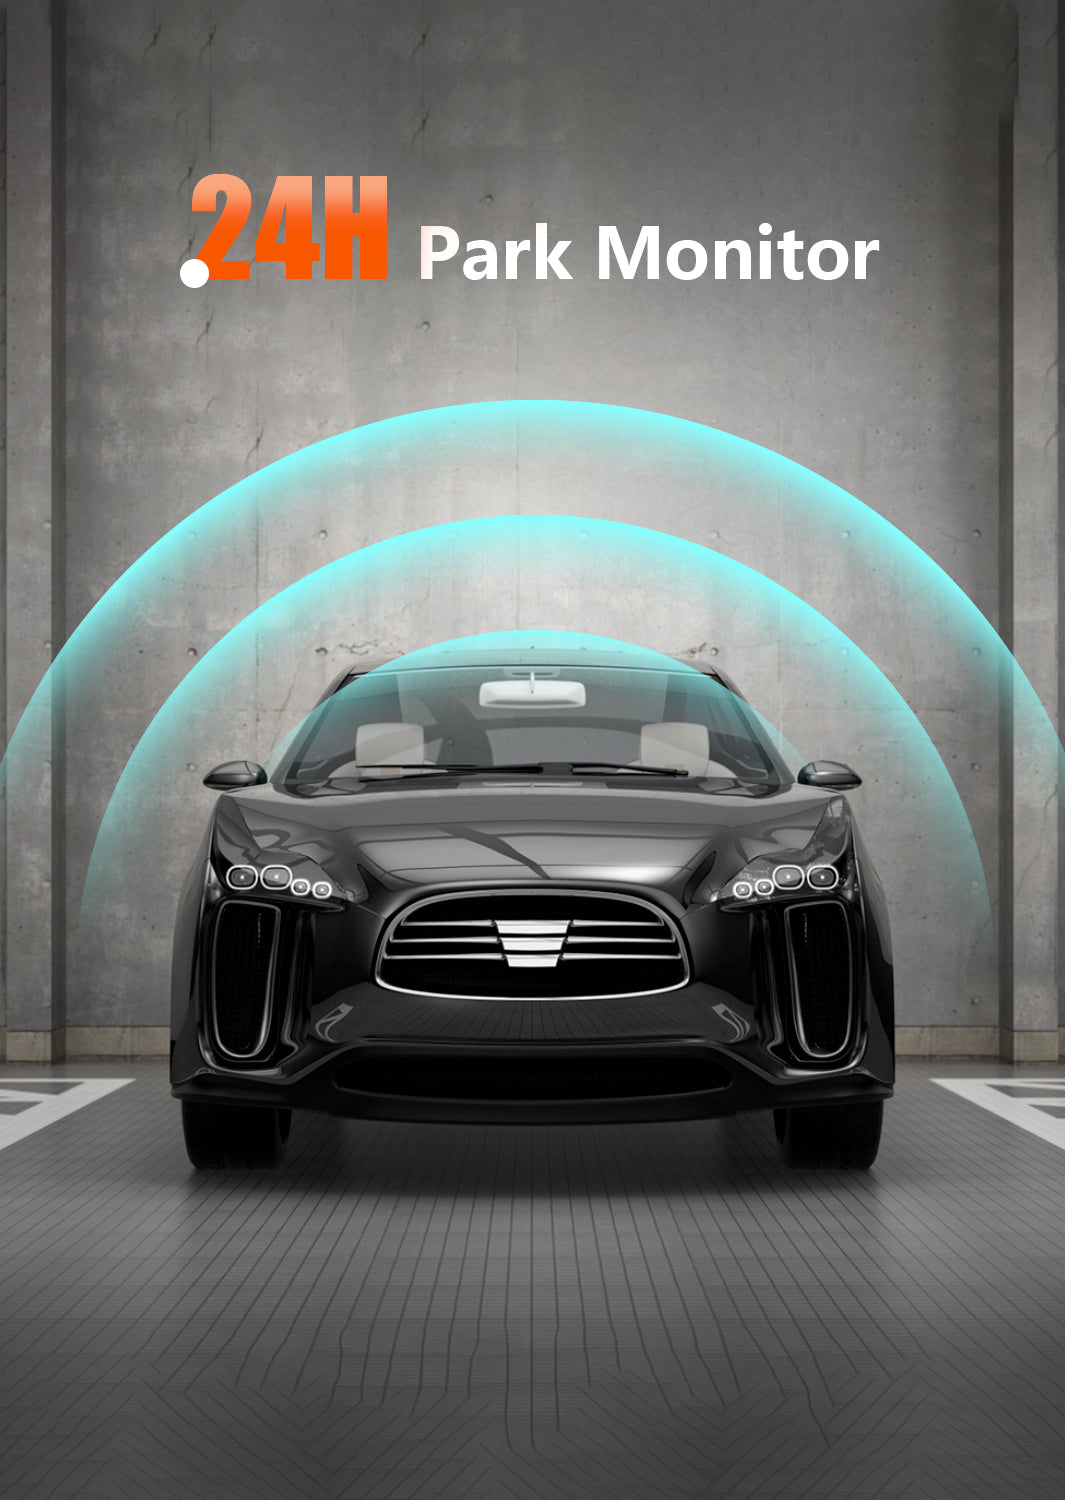 REDTIGER-T27-Hardwire-Kit-for-Mirror-Dash-Cam-Backup-Camera-Type-C-Port-24h-parking-monitor